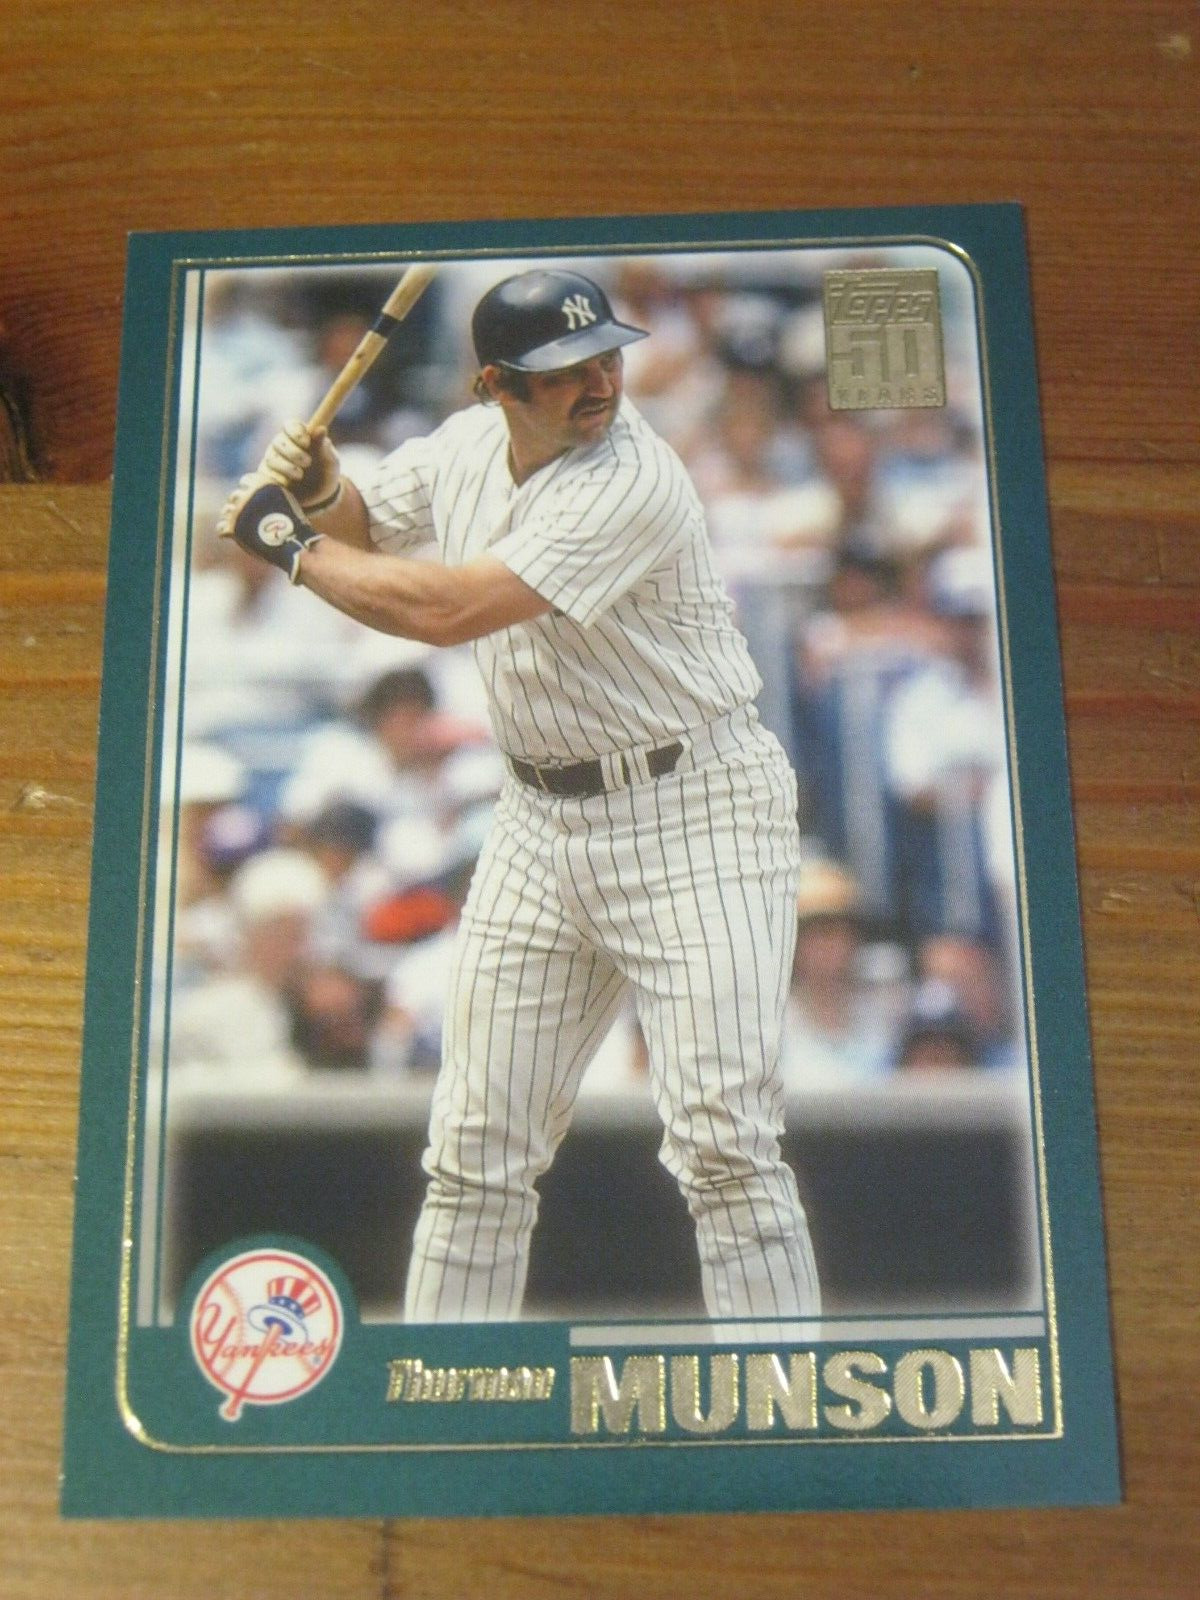 2021 Topps Archives #218 Thurman Munson - New York Yankees - 2001 Retro look ZB2